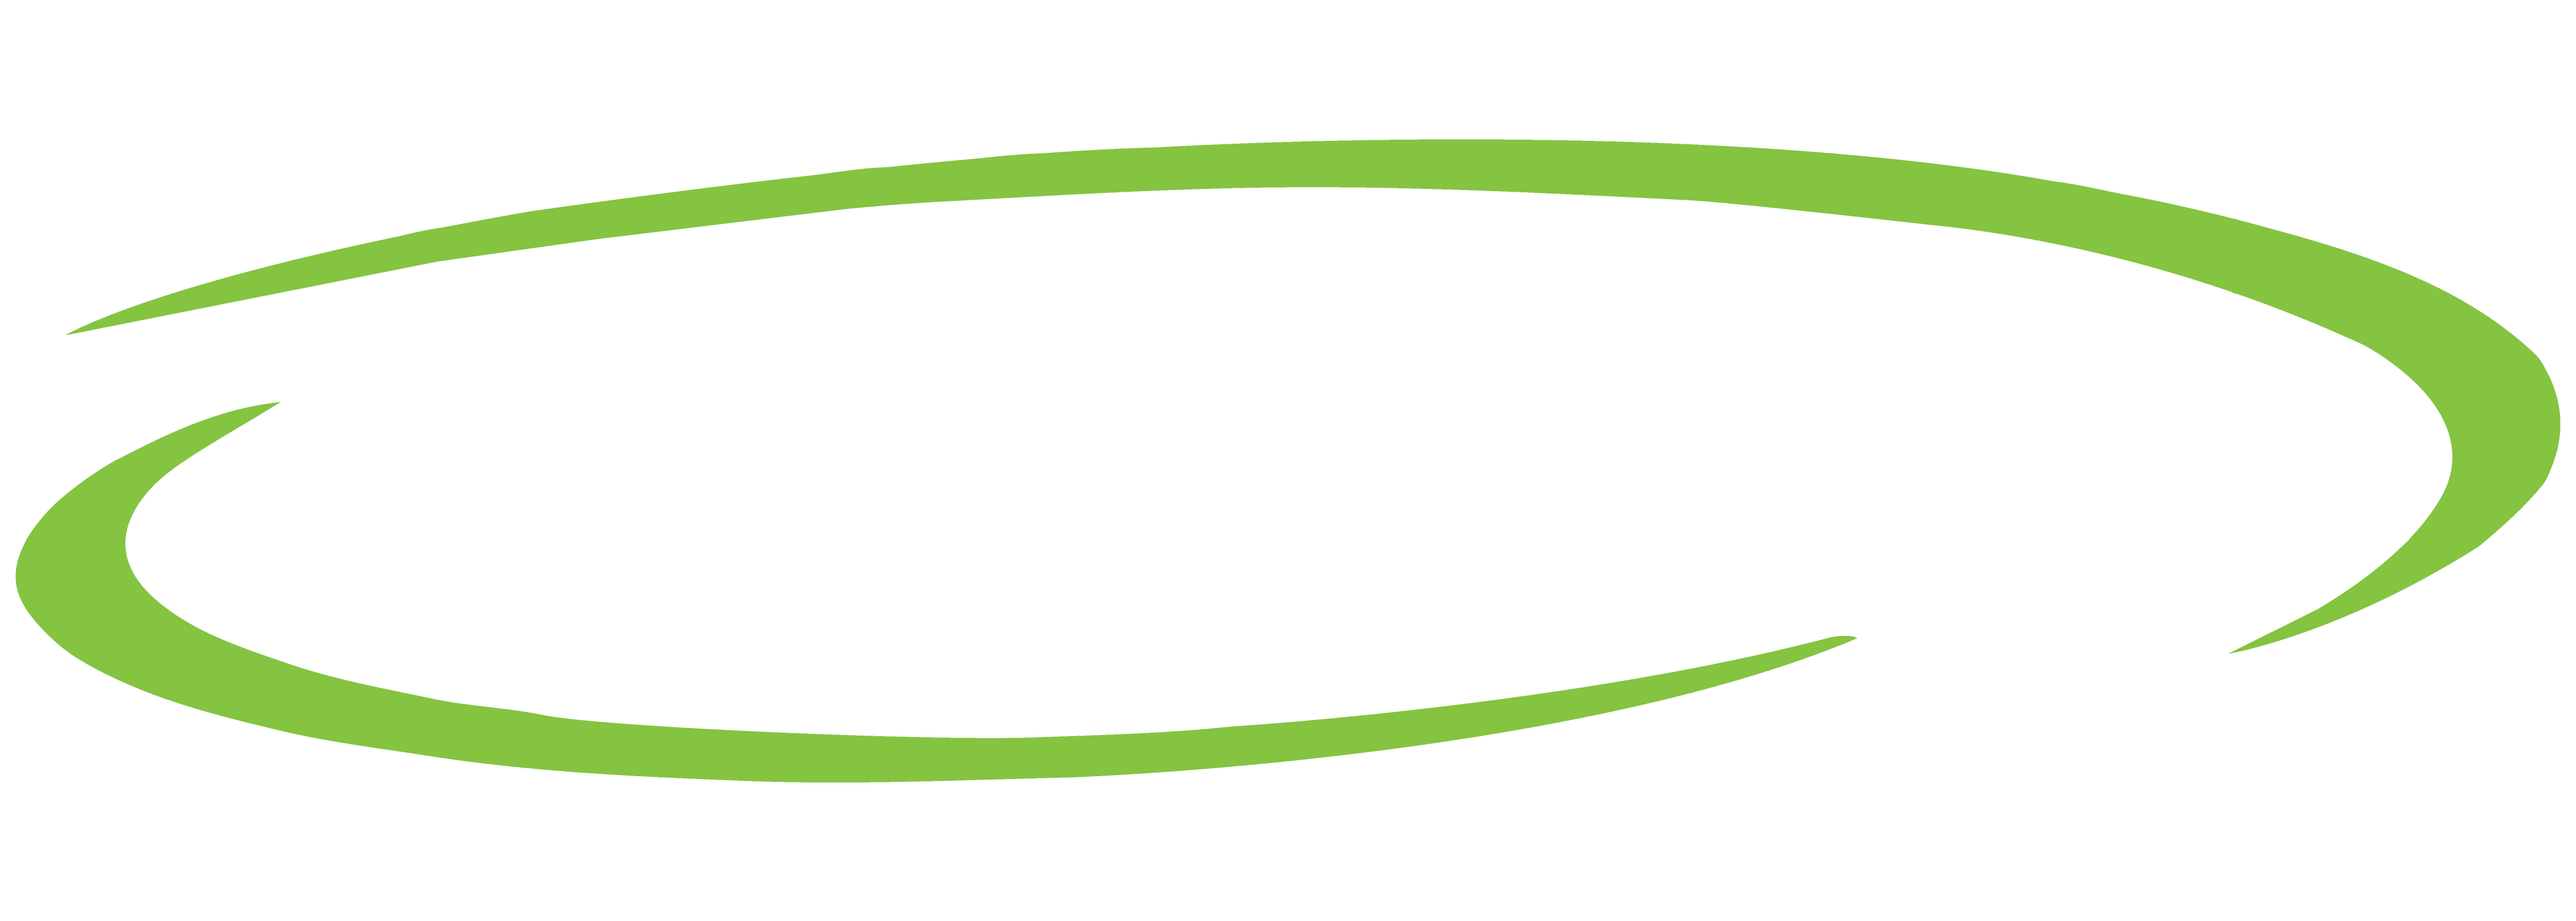 Ham and Tees